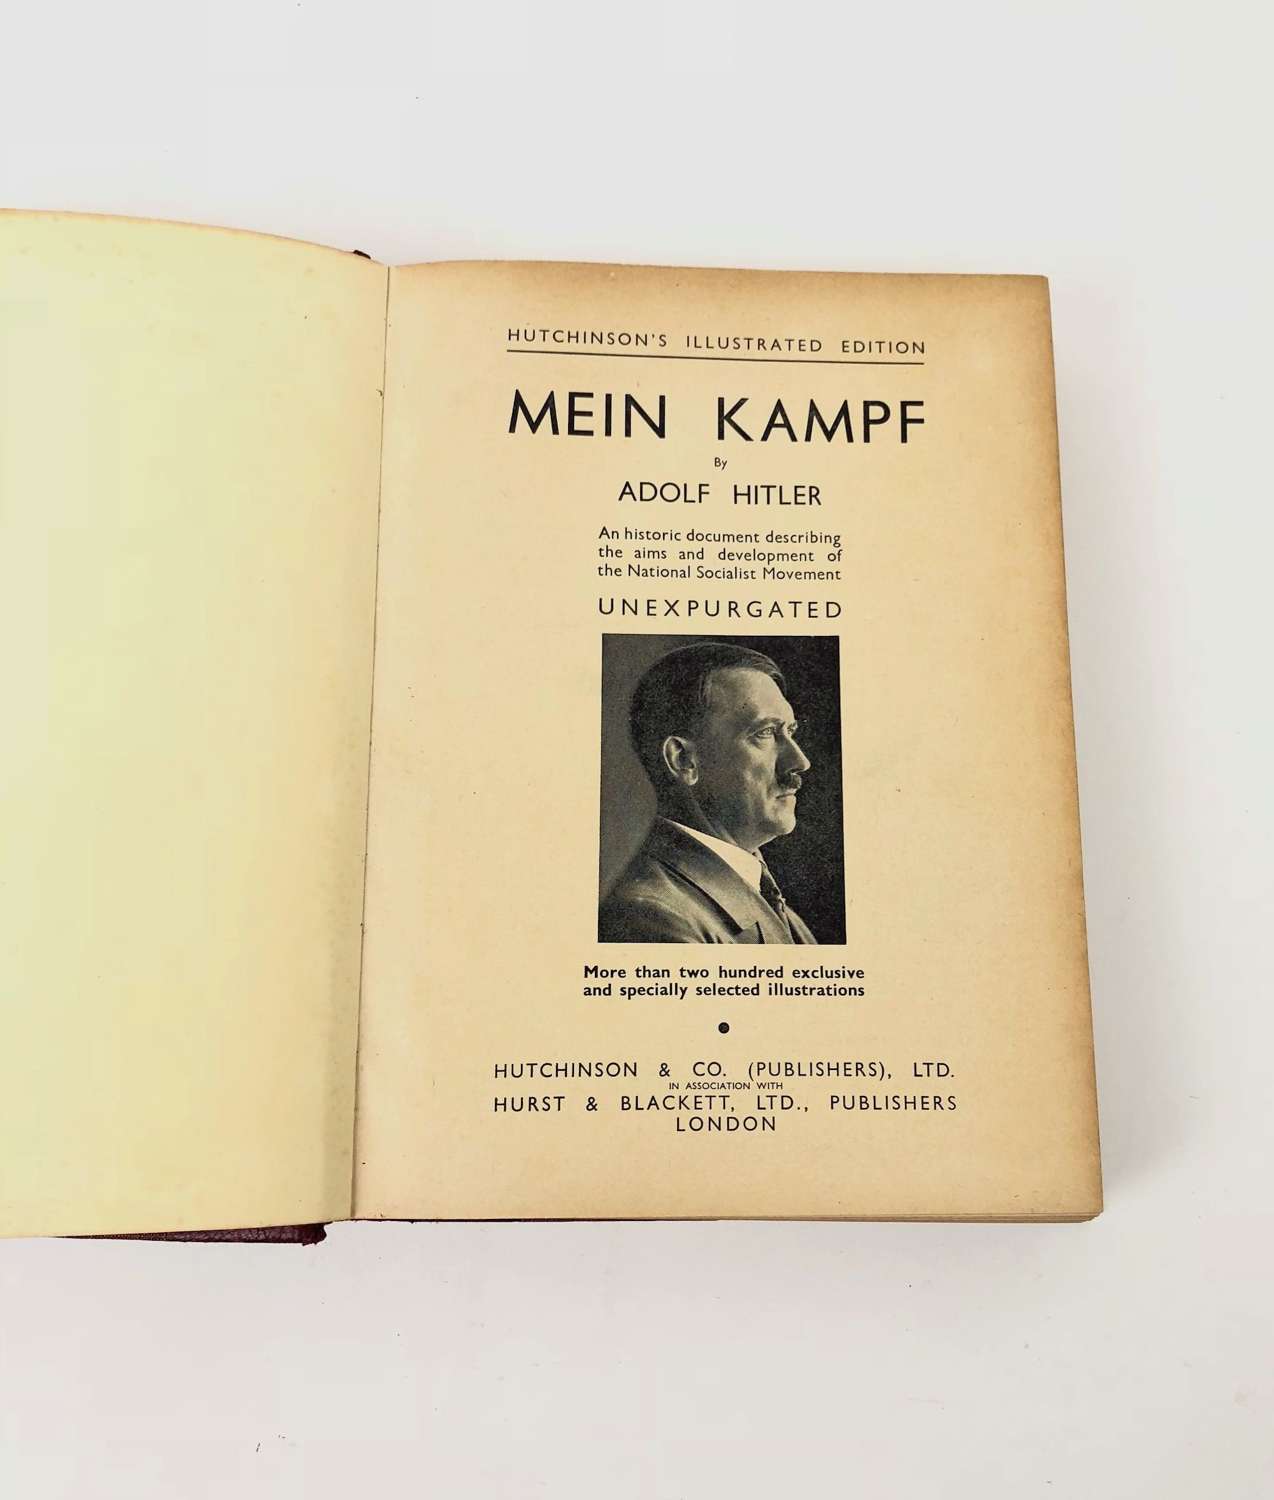 Mein Kampf by Adolf Hitler English Edition.